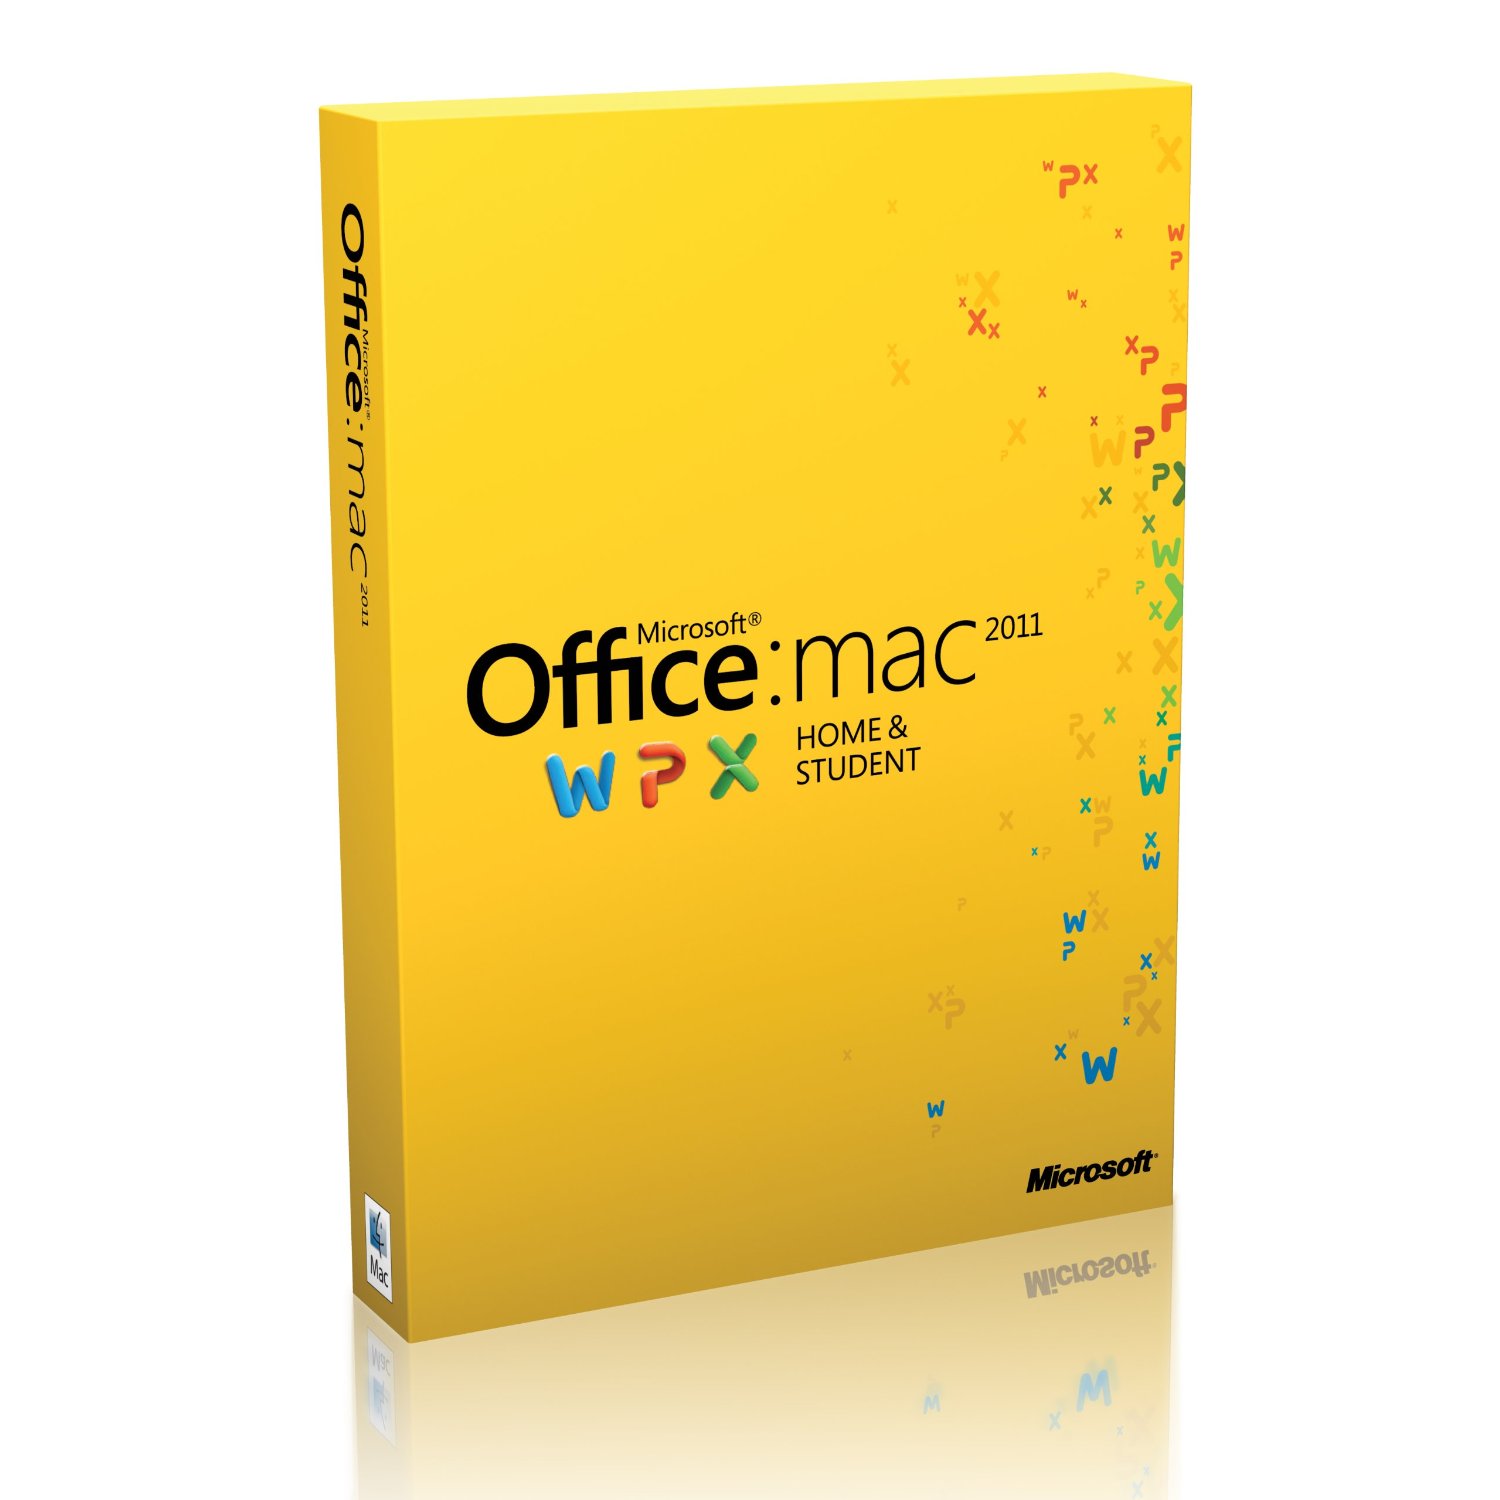 Office 2011 mac download